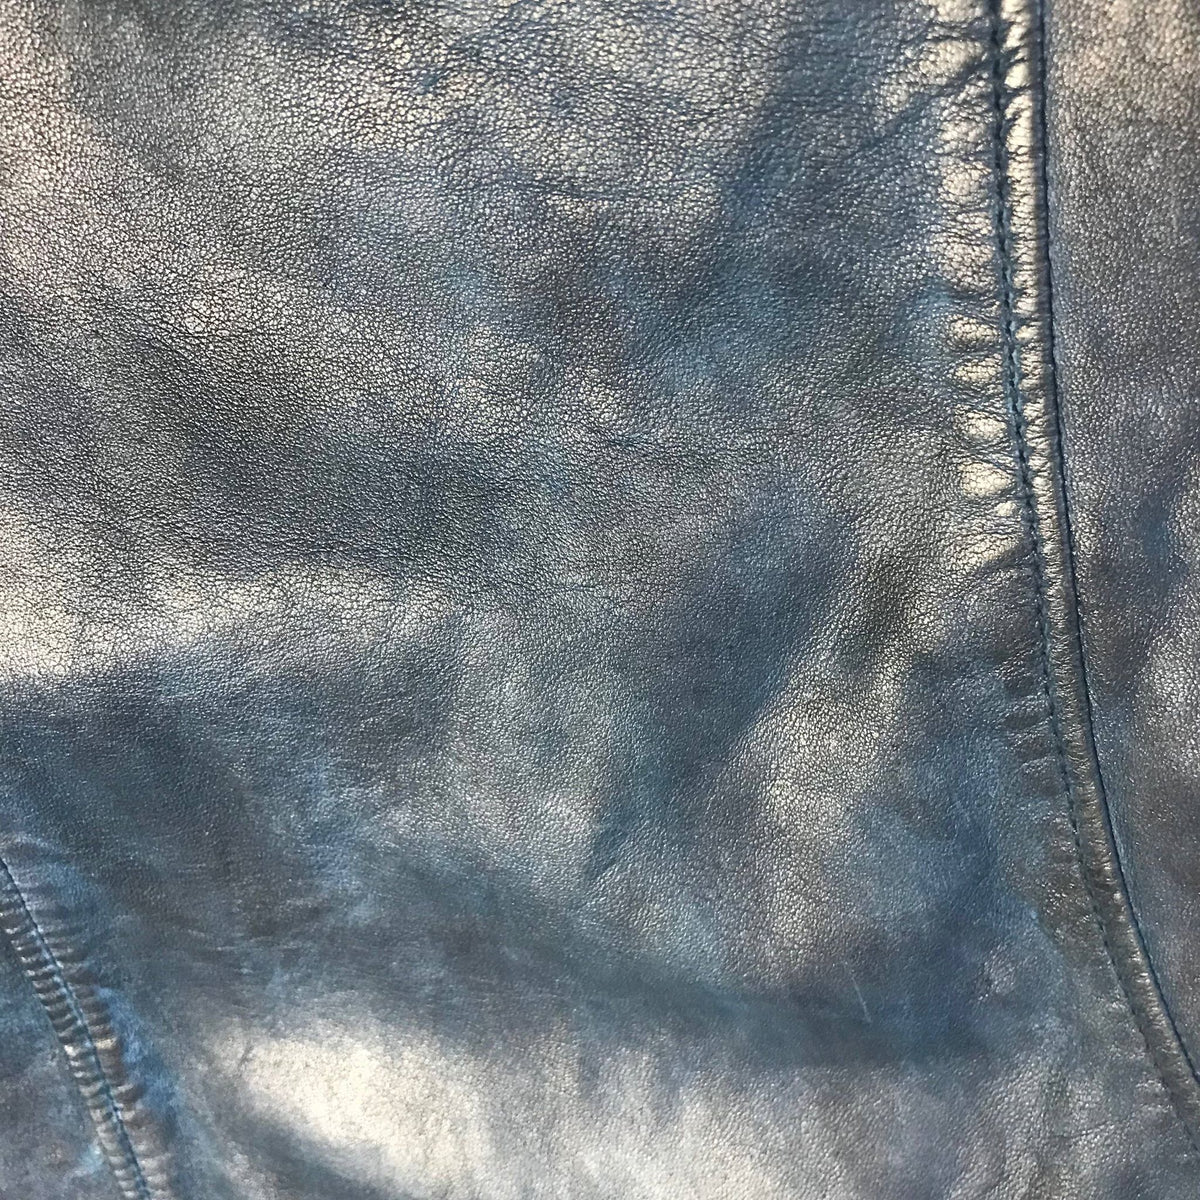 Scully Western Ocean Blue Lambskin Jacket - Dudes Boutique